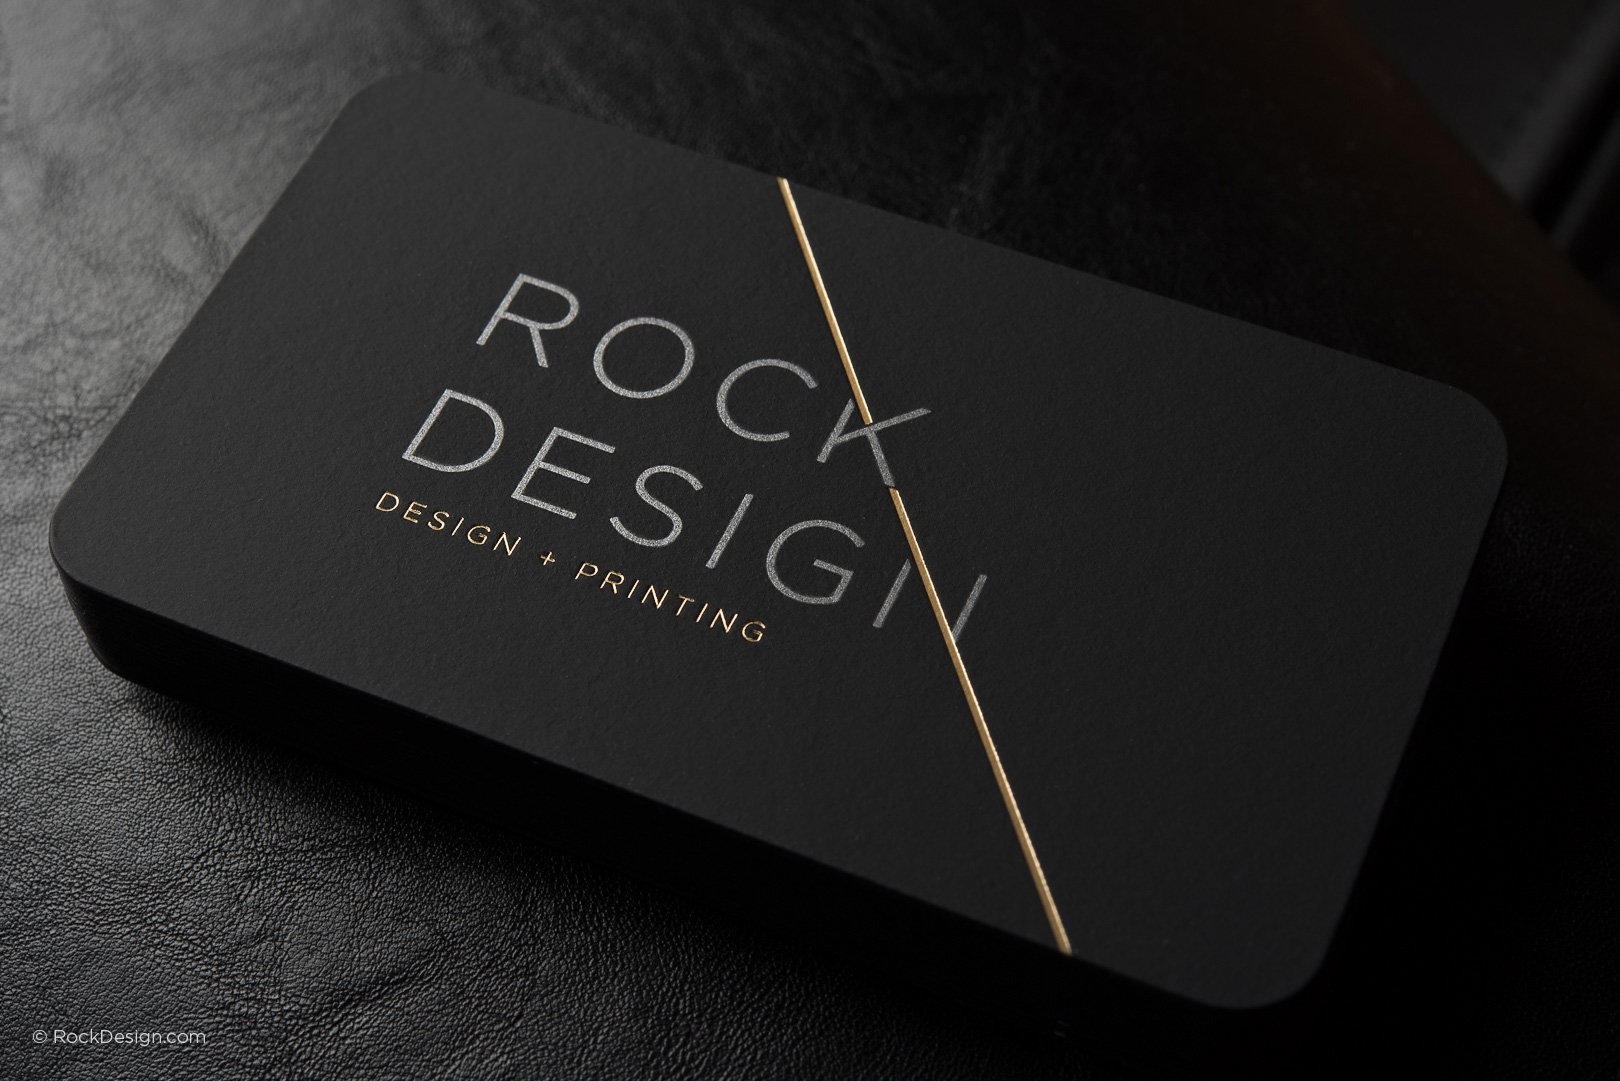 Free, printable, customizable luxury business cards